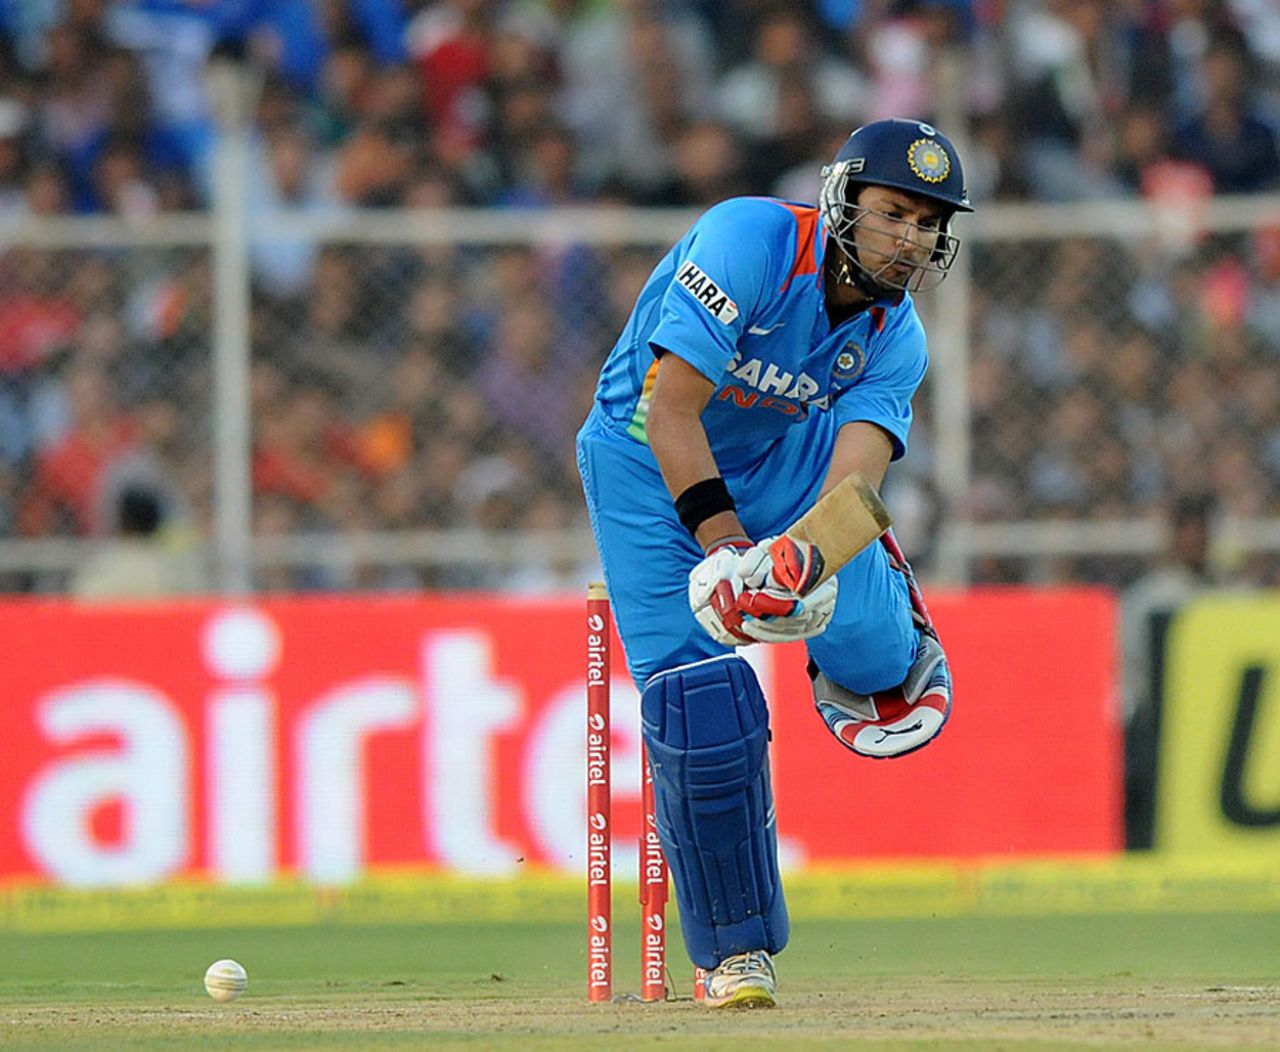 Yuvraj Singh is struck on the toe, India v Pakistan, 2nd Twenty20, Ahmedabad, December 28, 2012